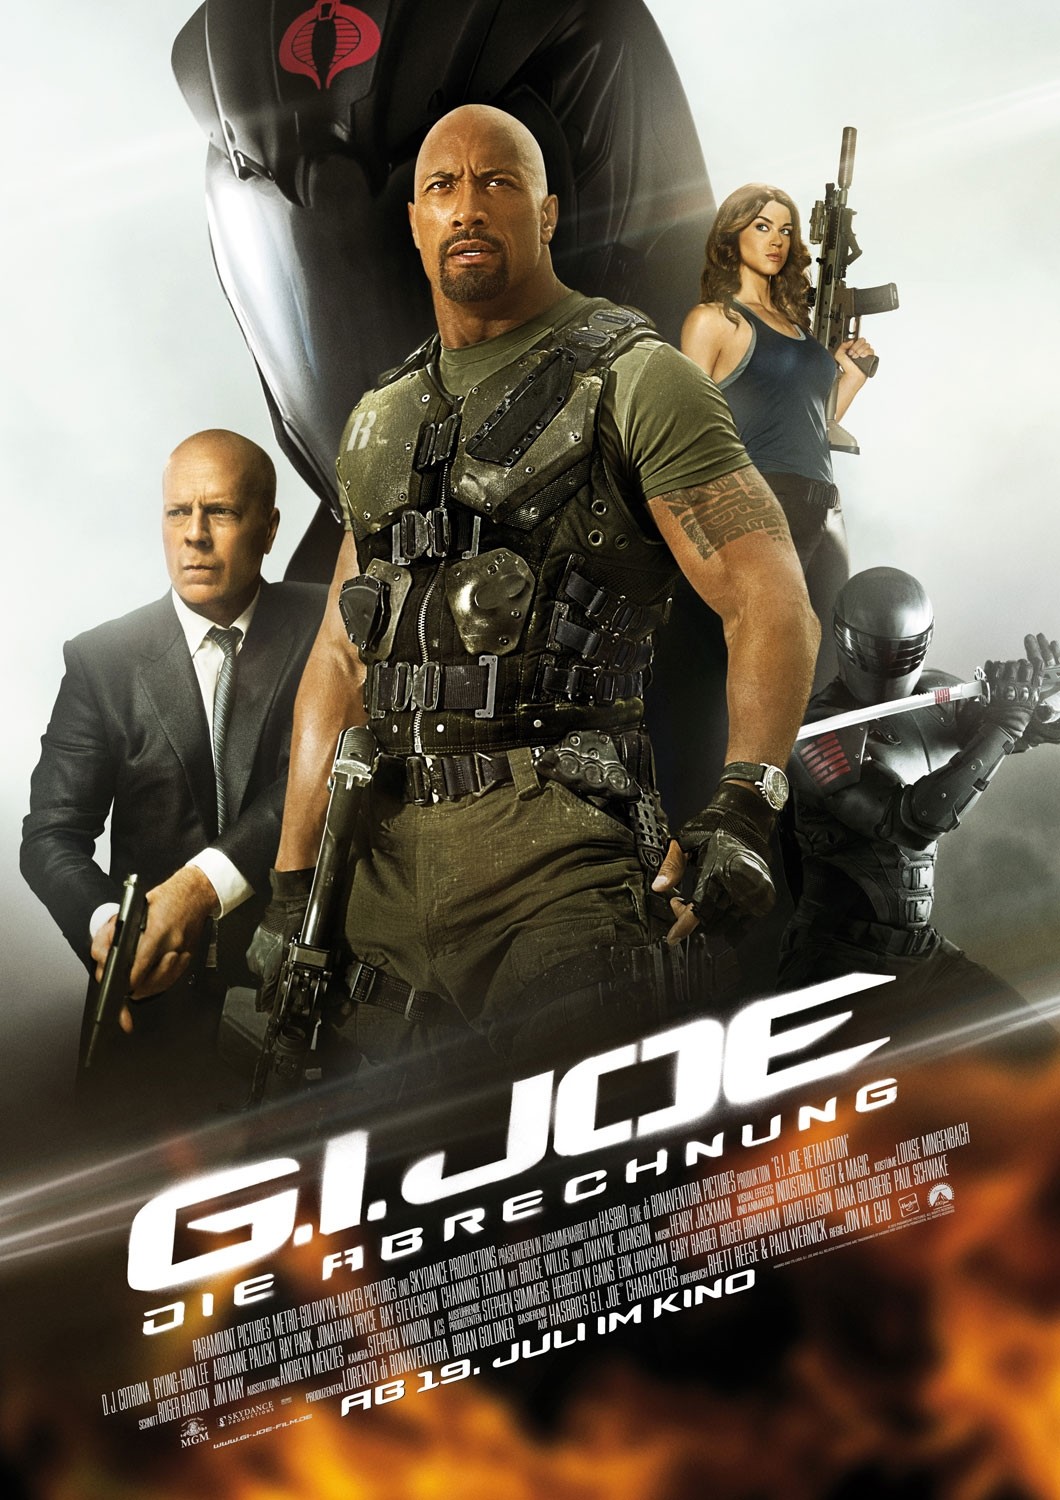 Extra Large Movie Poster Image for G.I. Joe: Retaliation (#24 of 32)